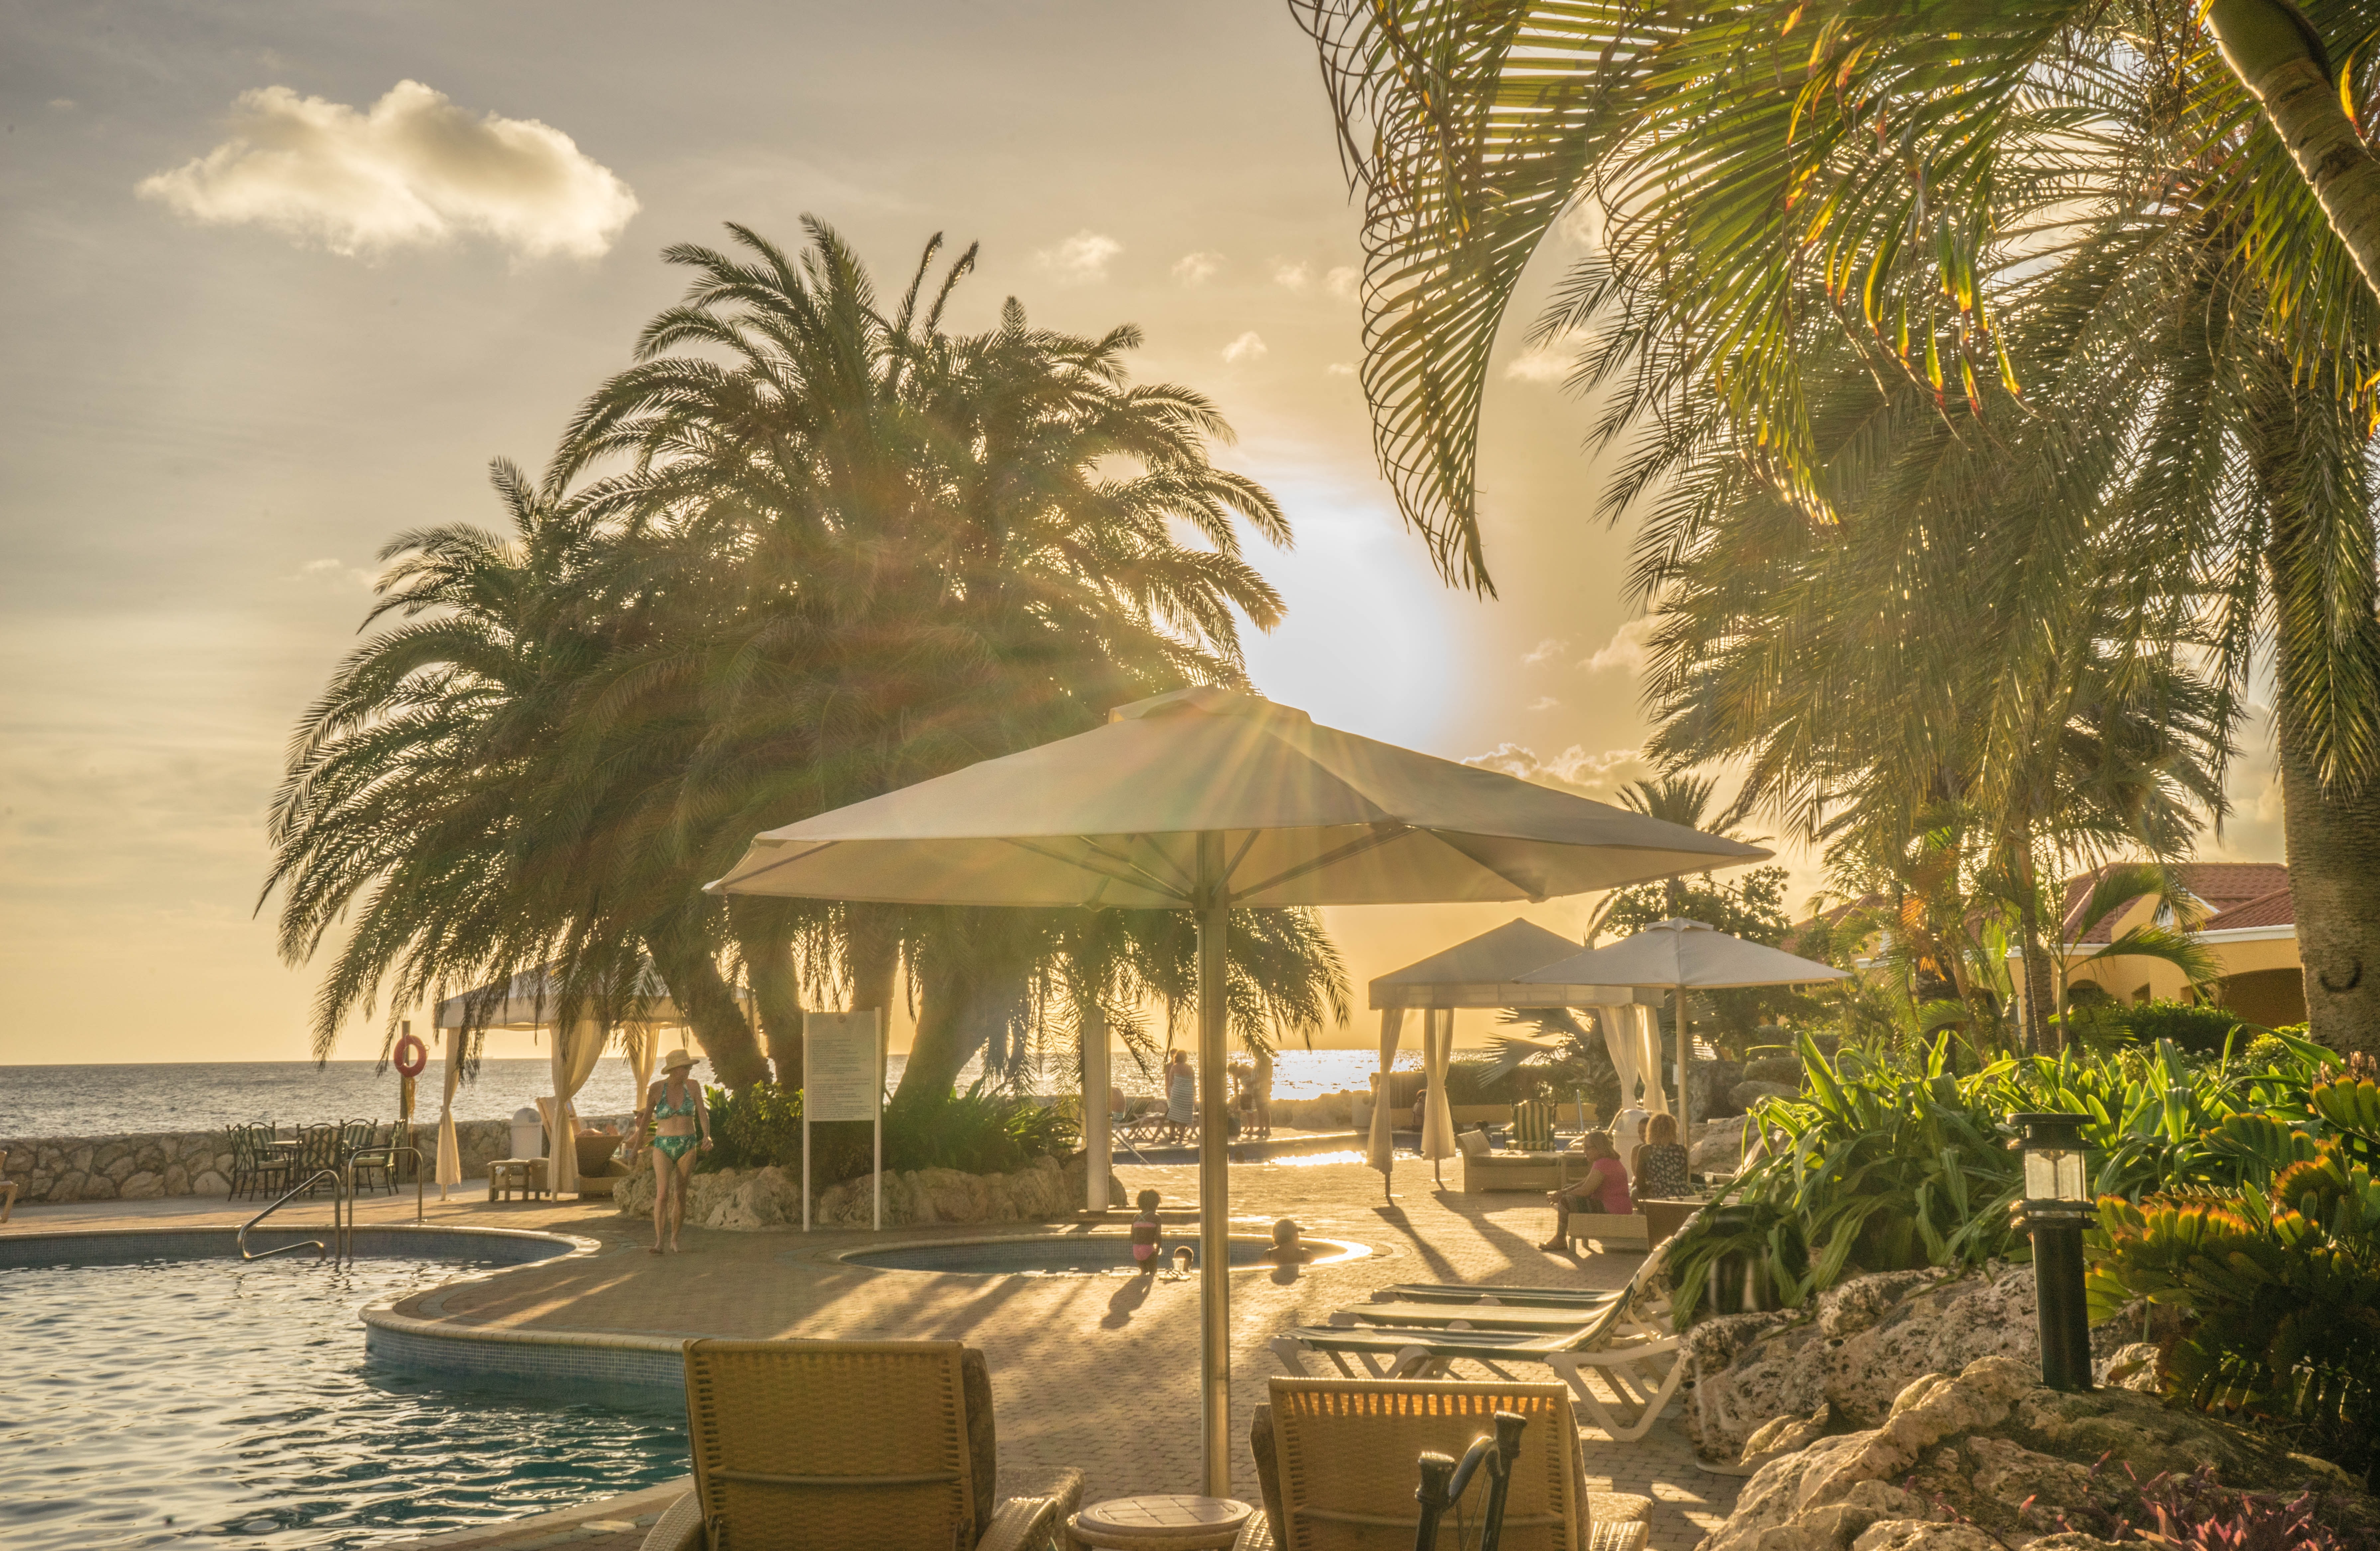 Vacation, Cabana, Sunset, Travel, Beach, palm tree, tropical climate